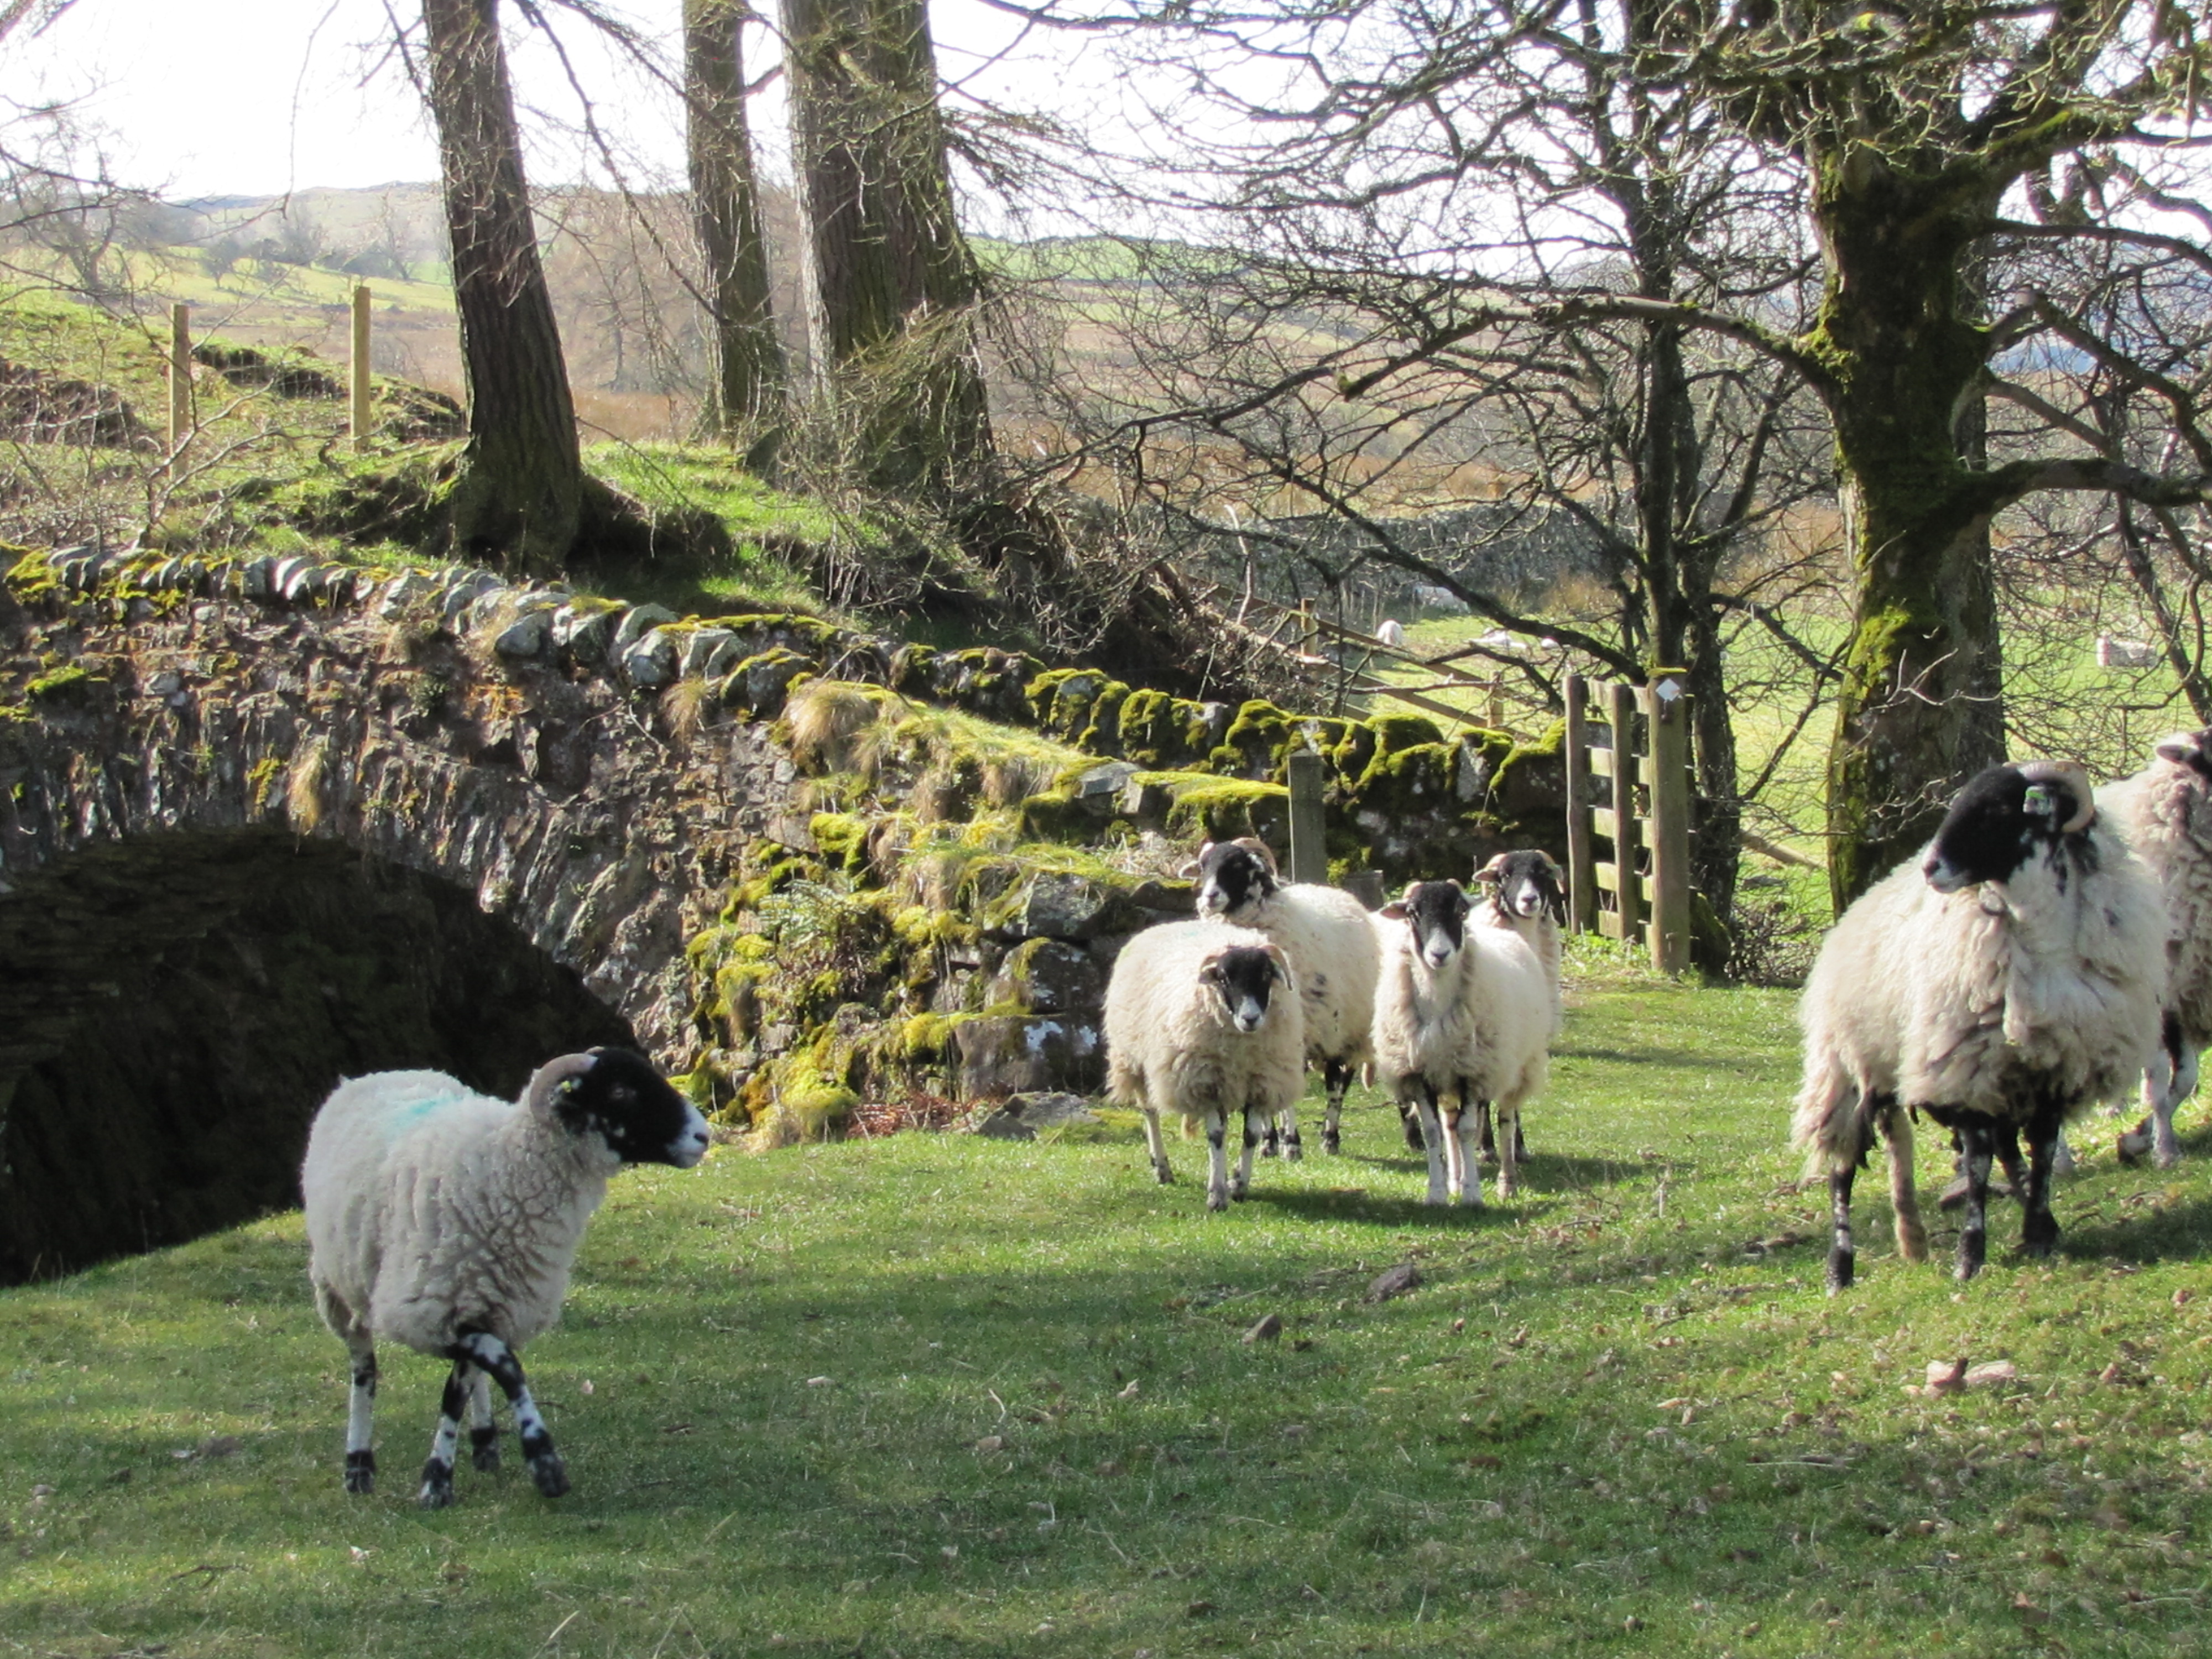 Photo of sheep near a stone wall bridge